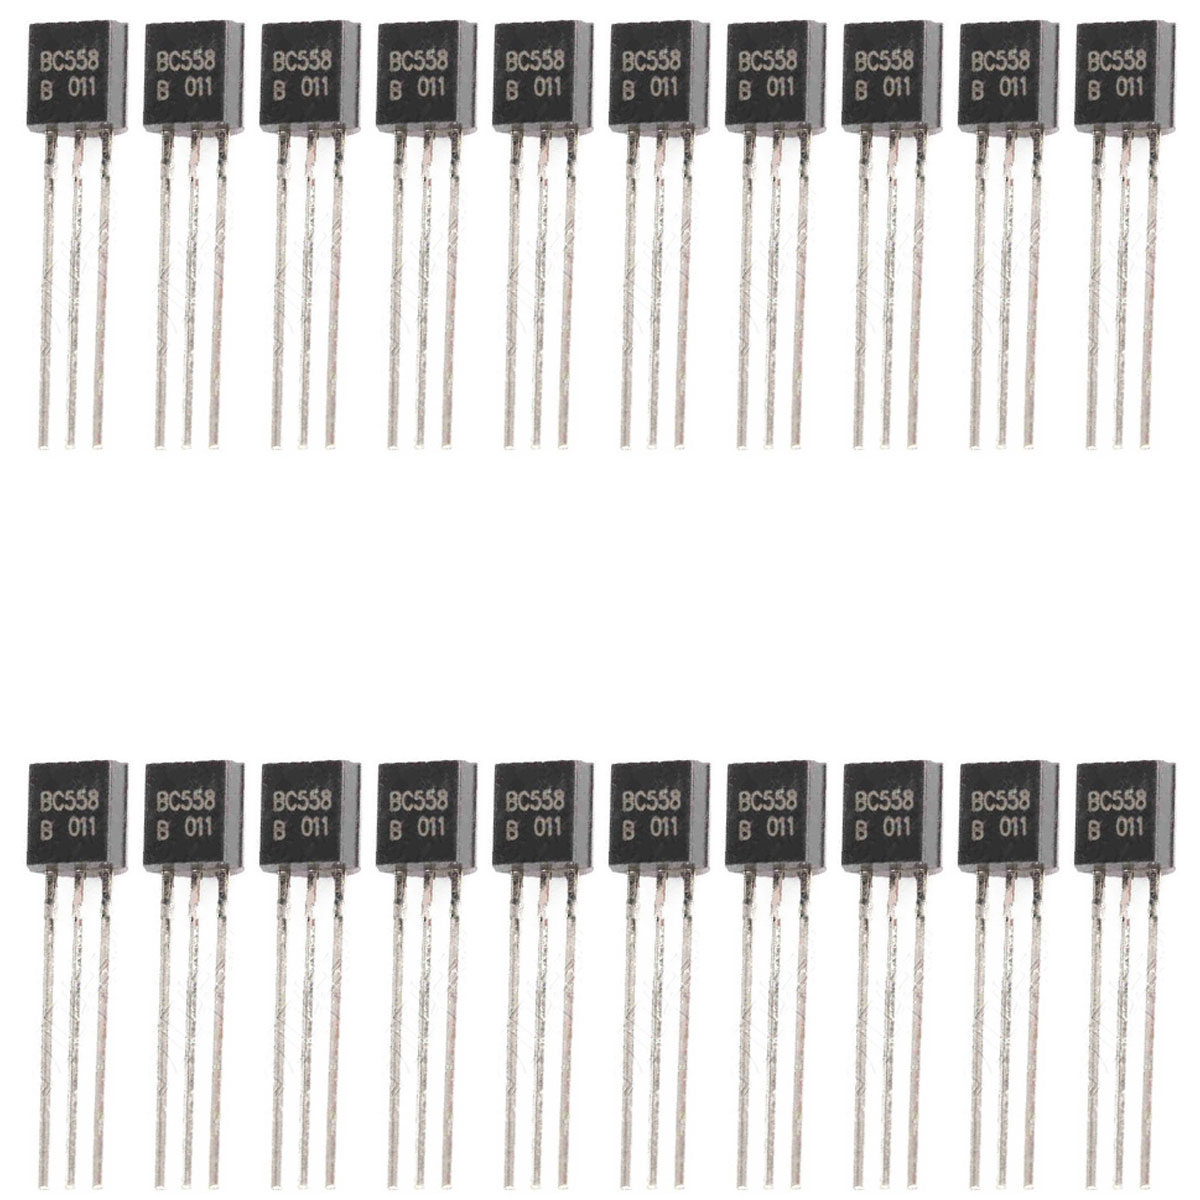 20x Transistor PNP BC558